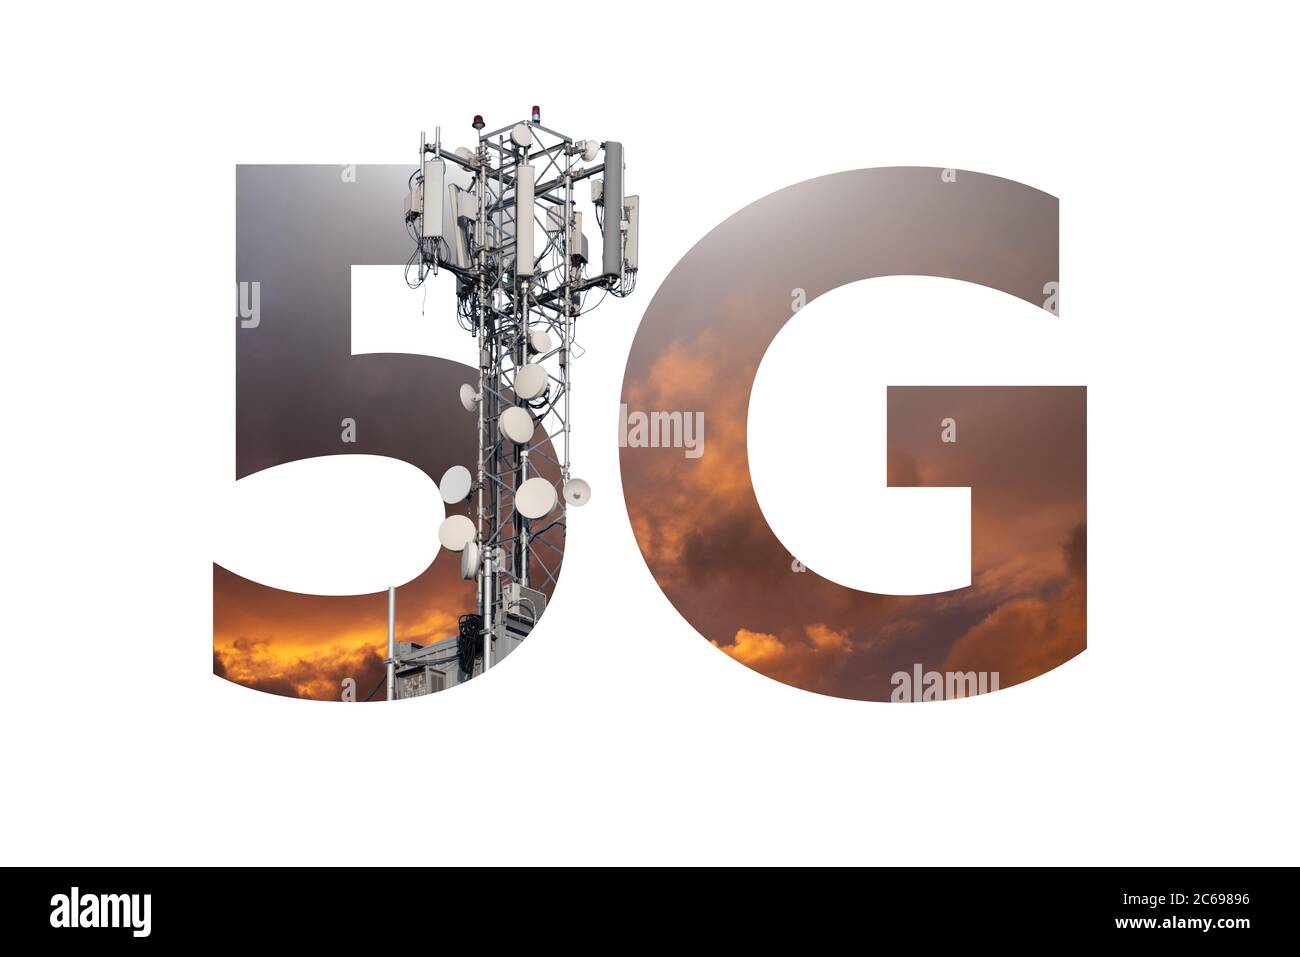 Transmitter in 5G network symbol Stock Photo